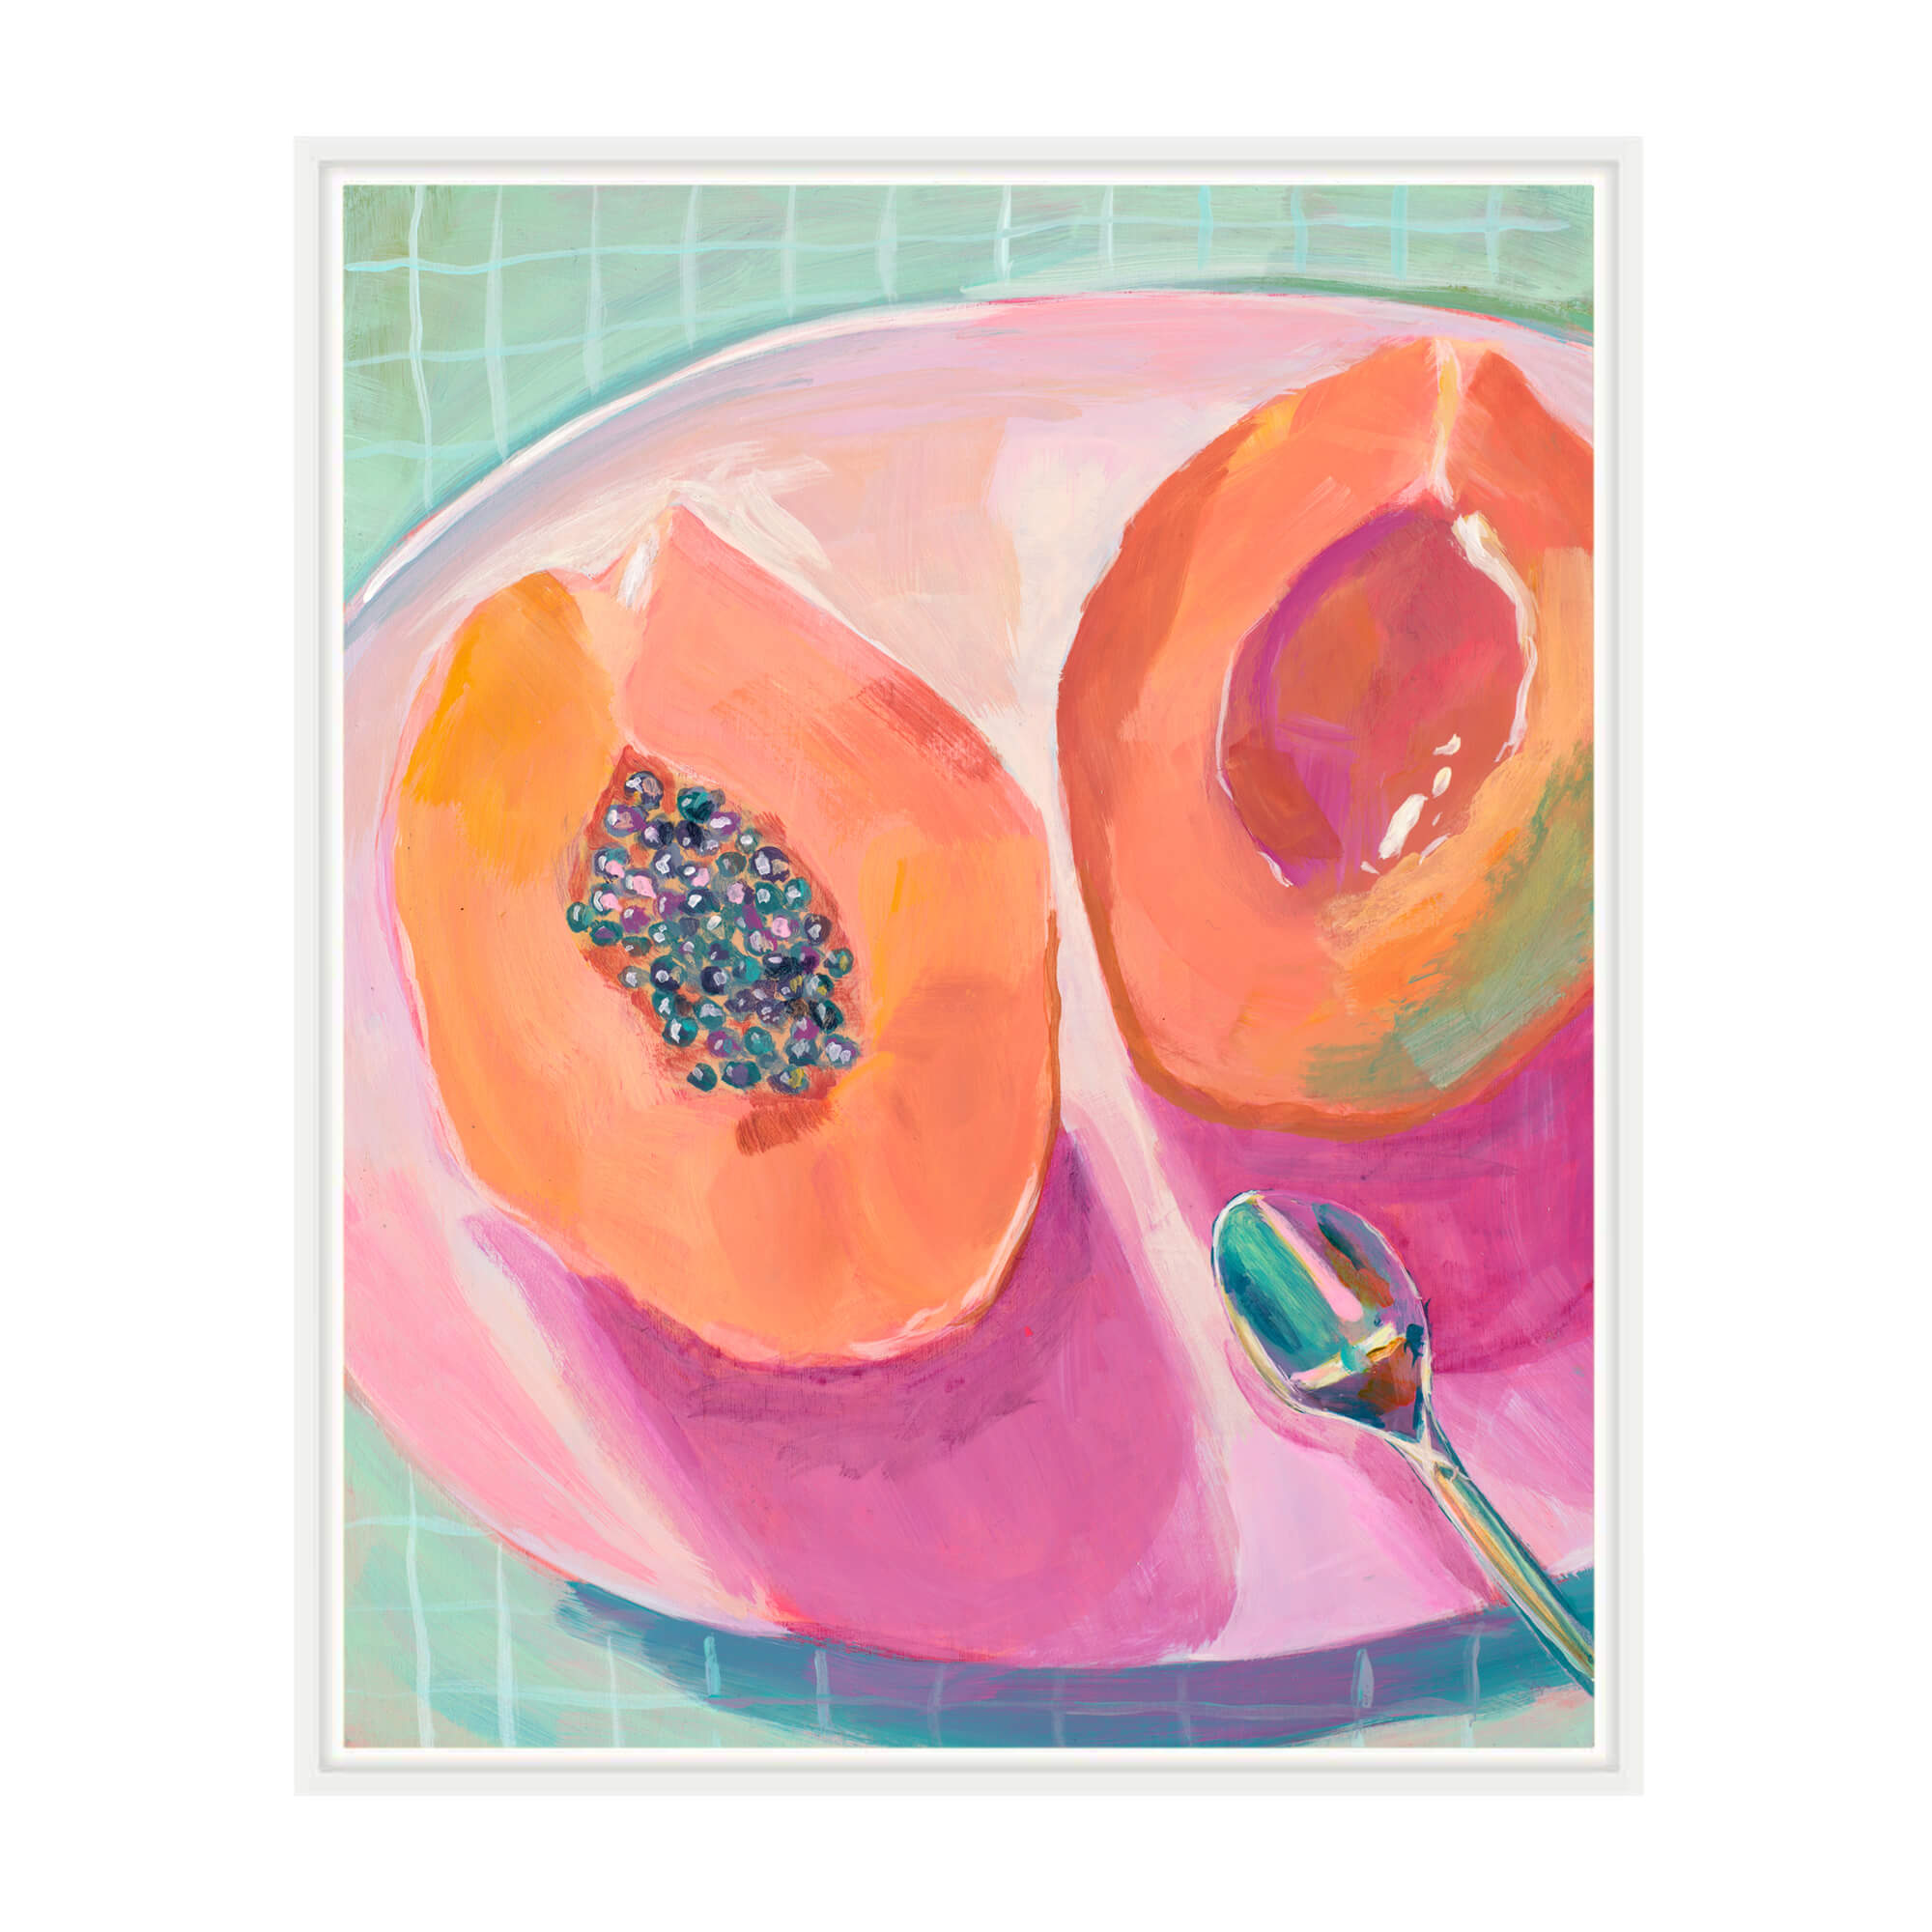 A papaya on a plate by Hawaii artist Lindsay Wilkins